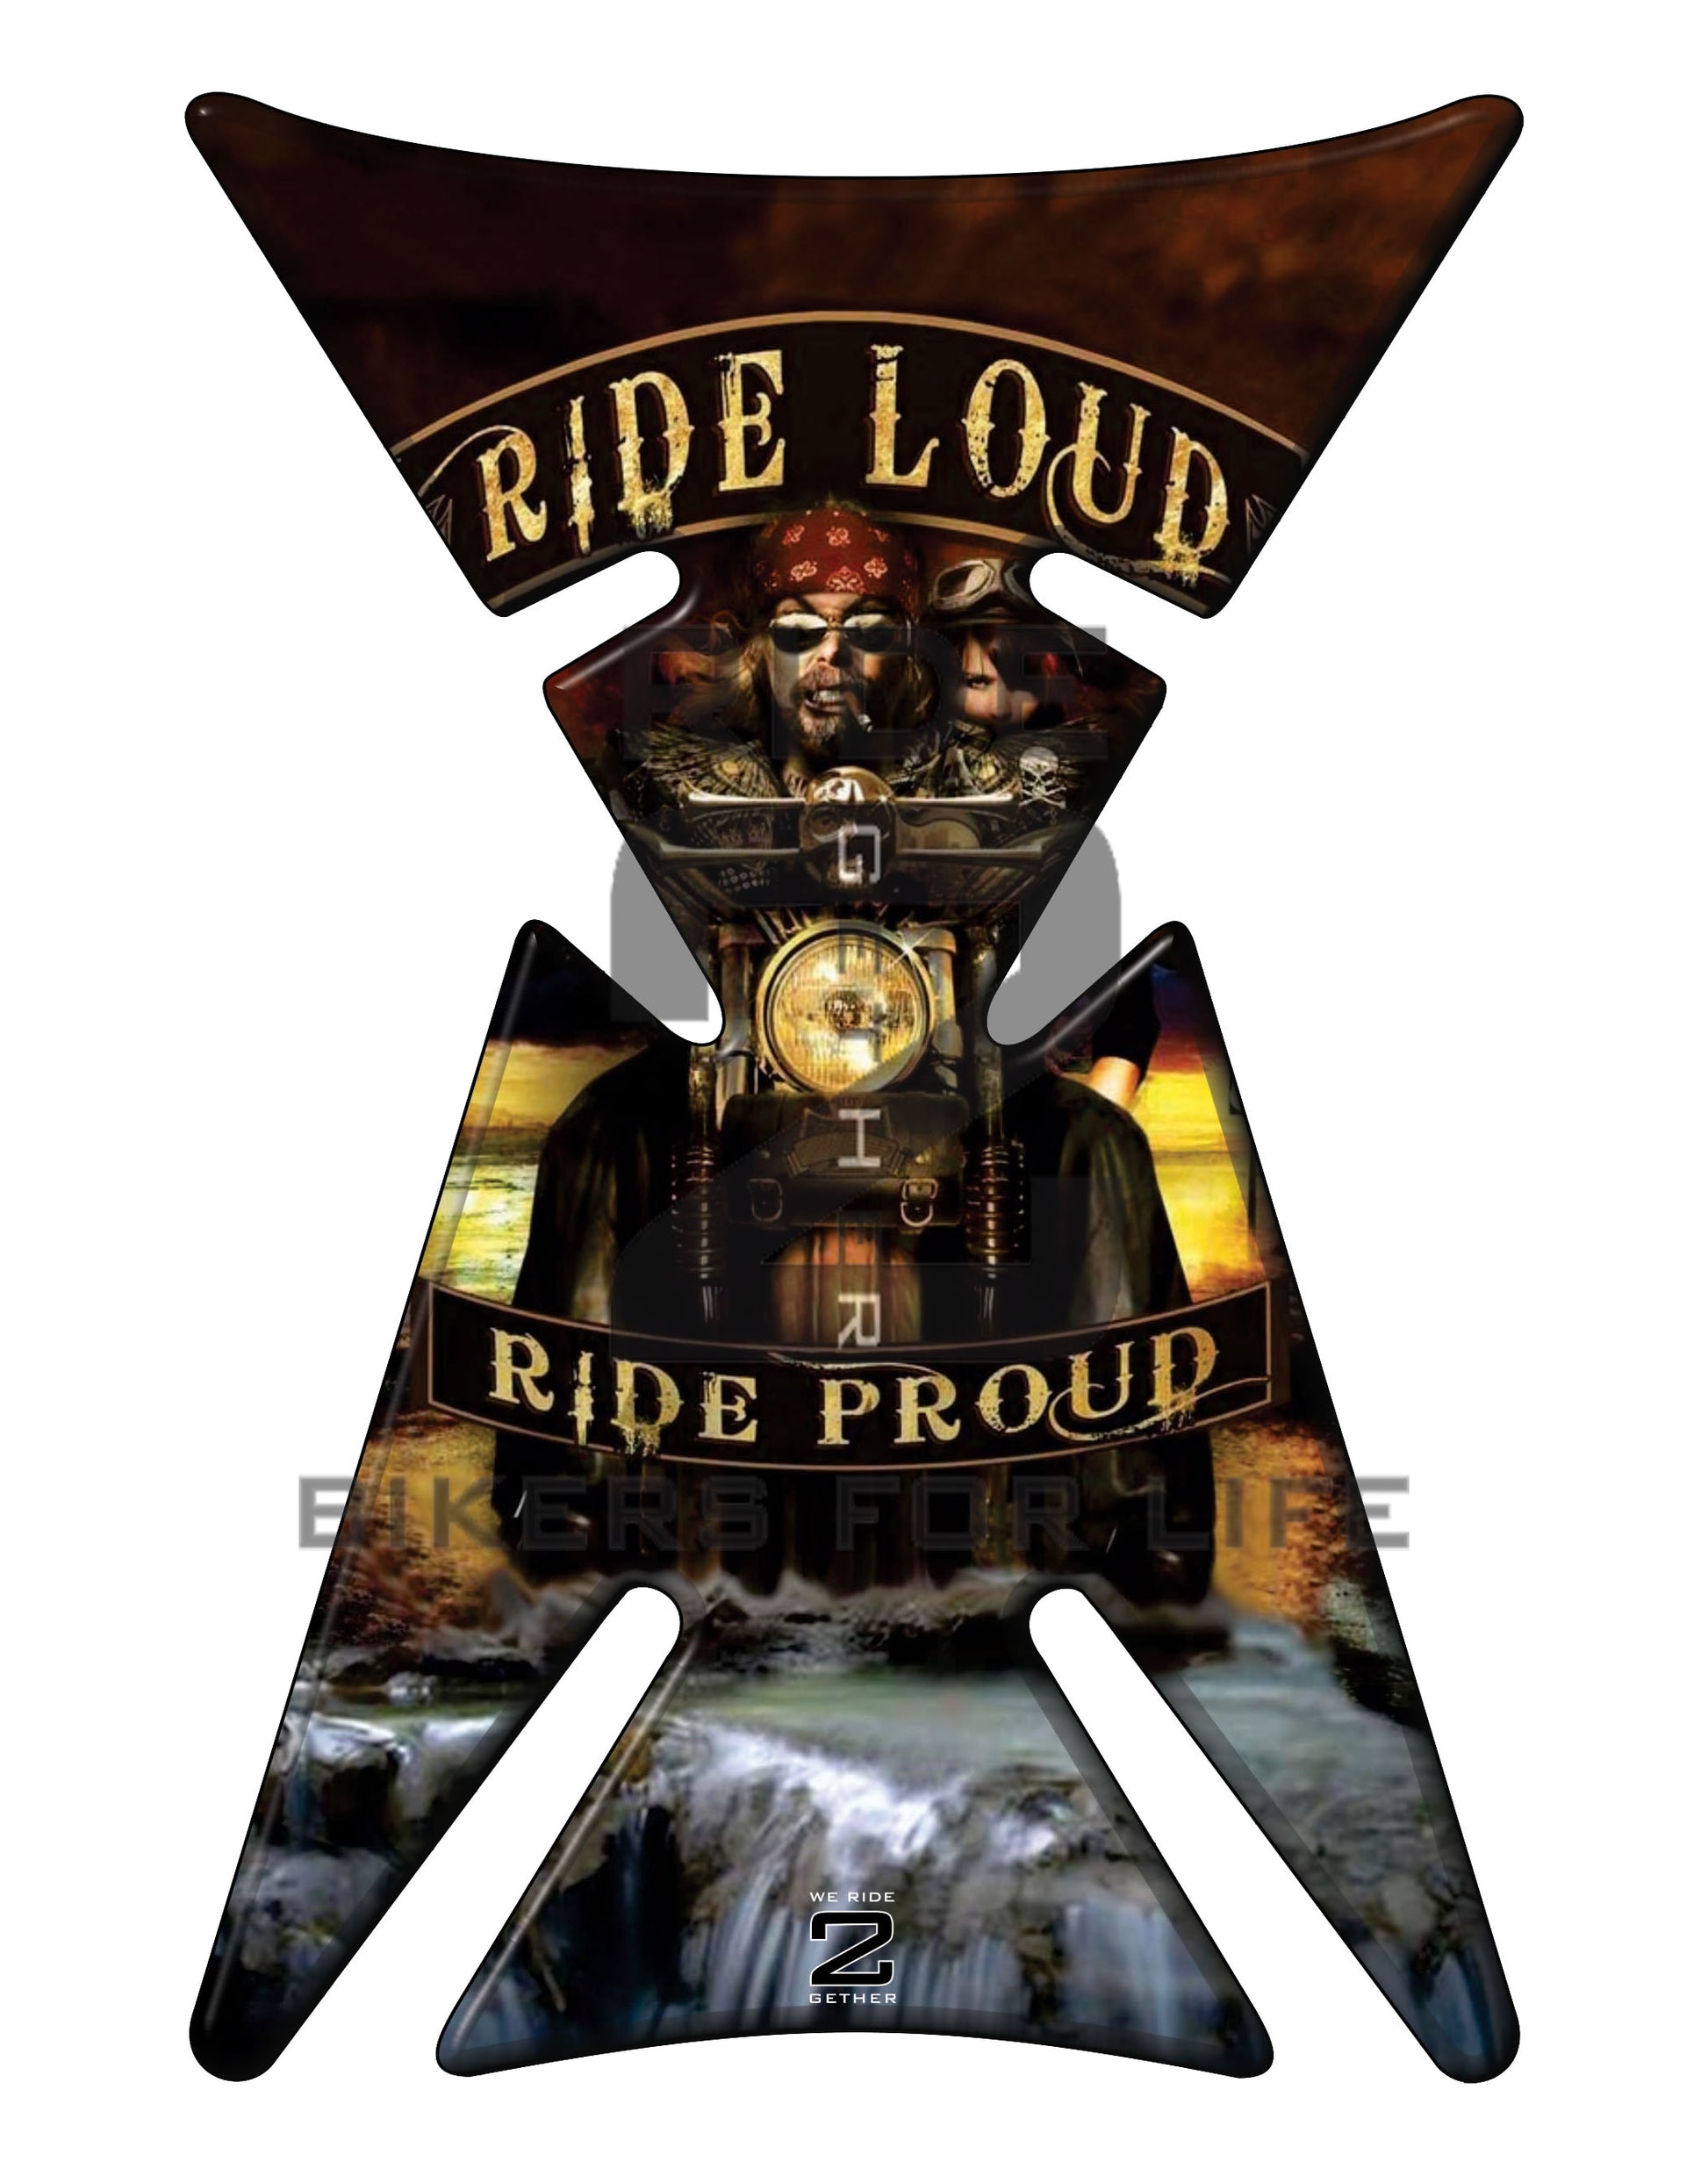 Universal Fit Ride Loud Ride Proud Retro Design 4 Tank Pad